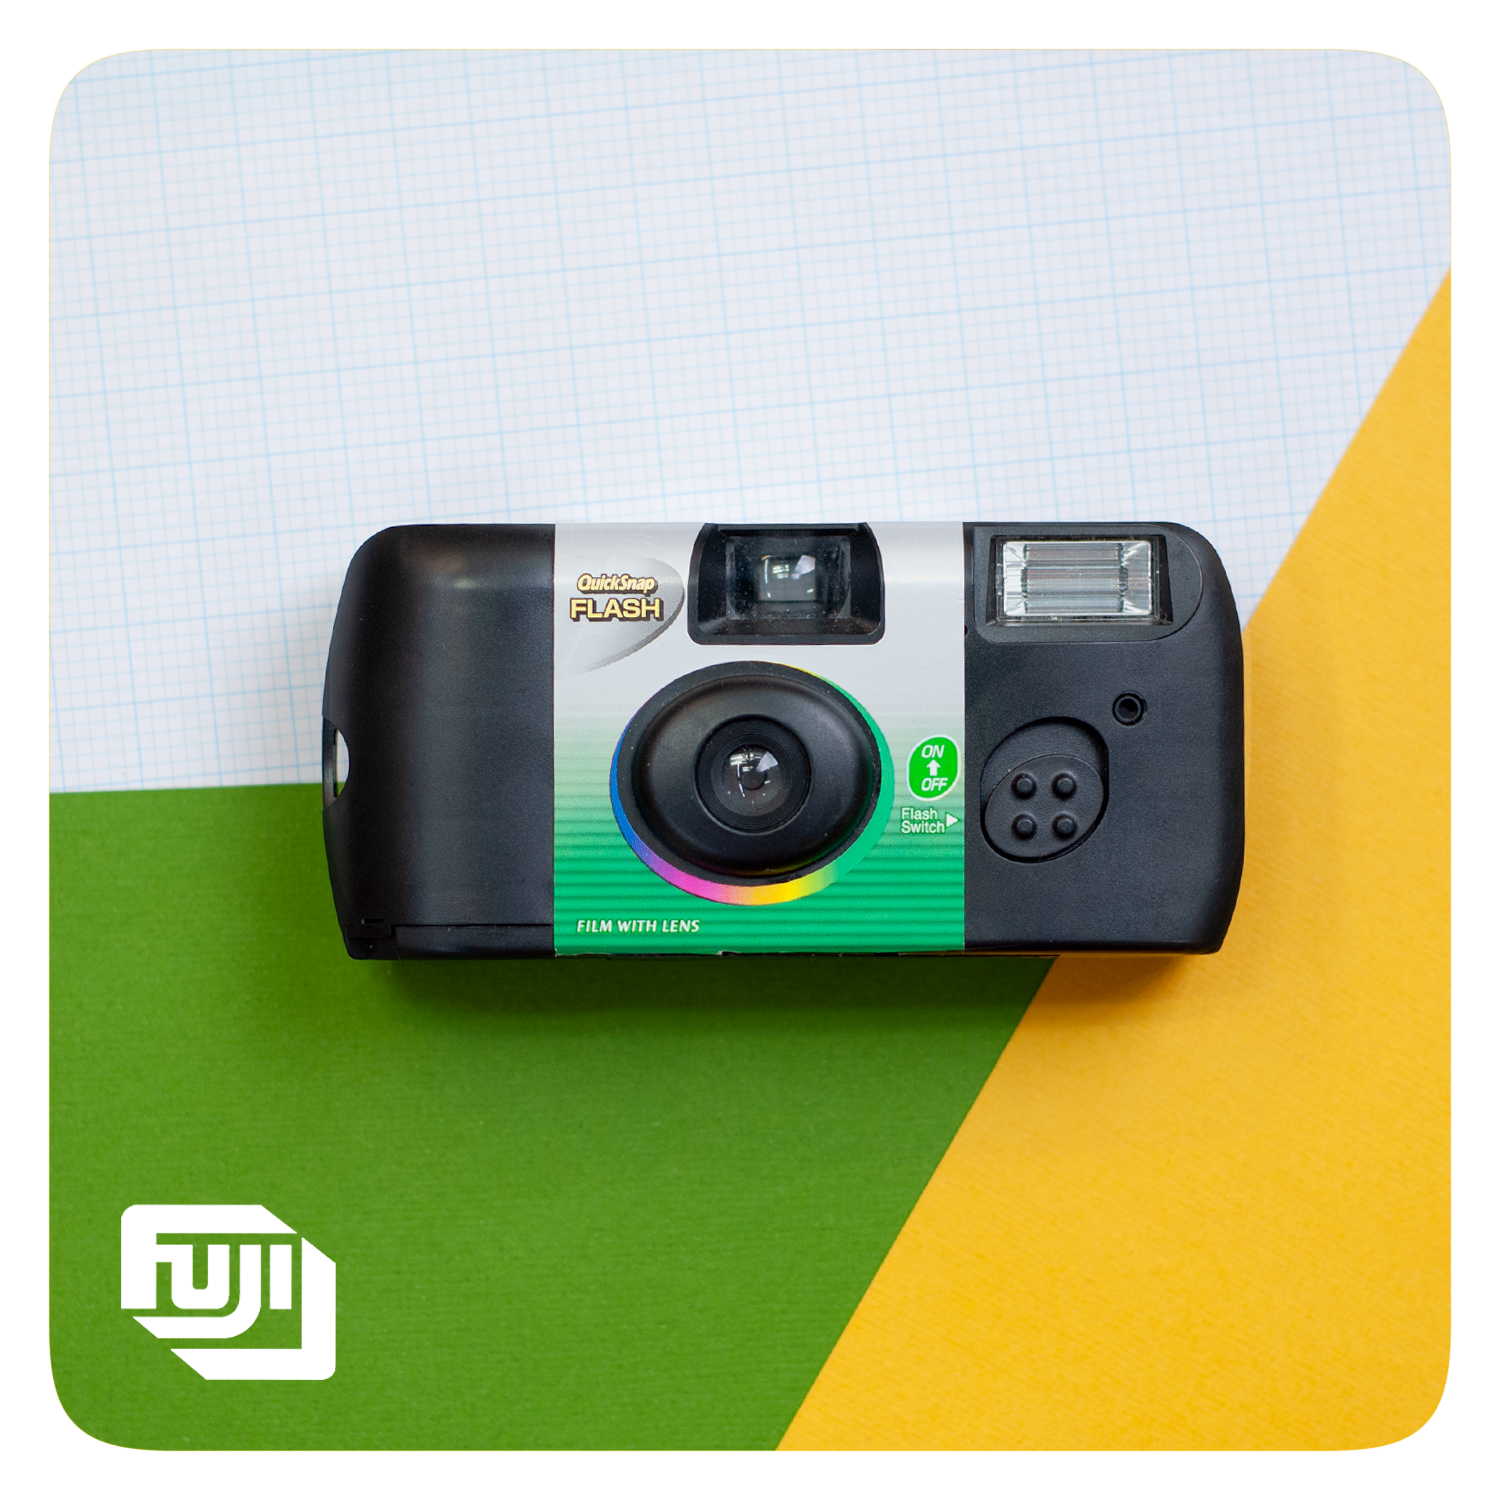 Fujifilm QuickSnap Flash 400 Single-Use Disposable Camera With Flash